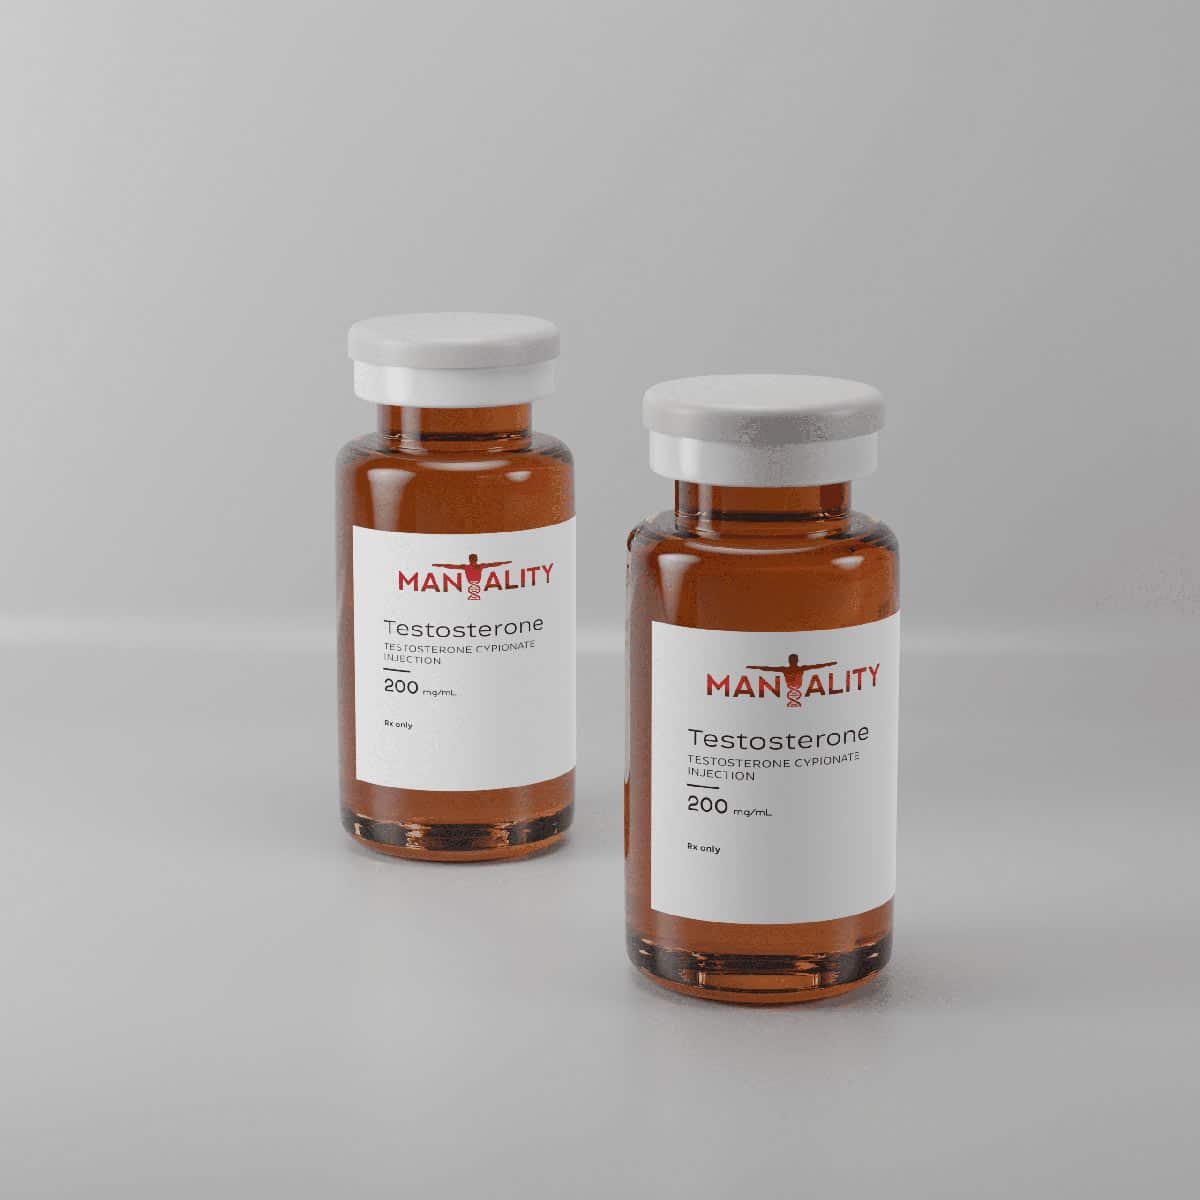 2 Bottles of Testosterone Cypionate Injection Medication